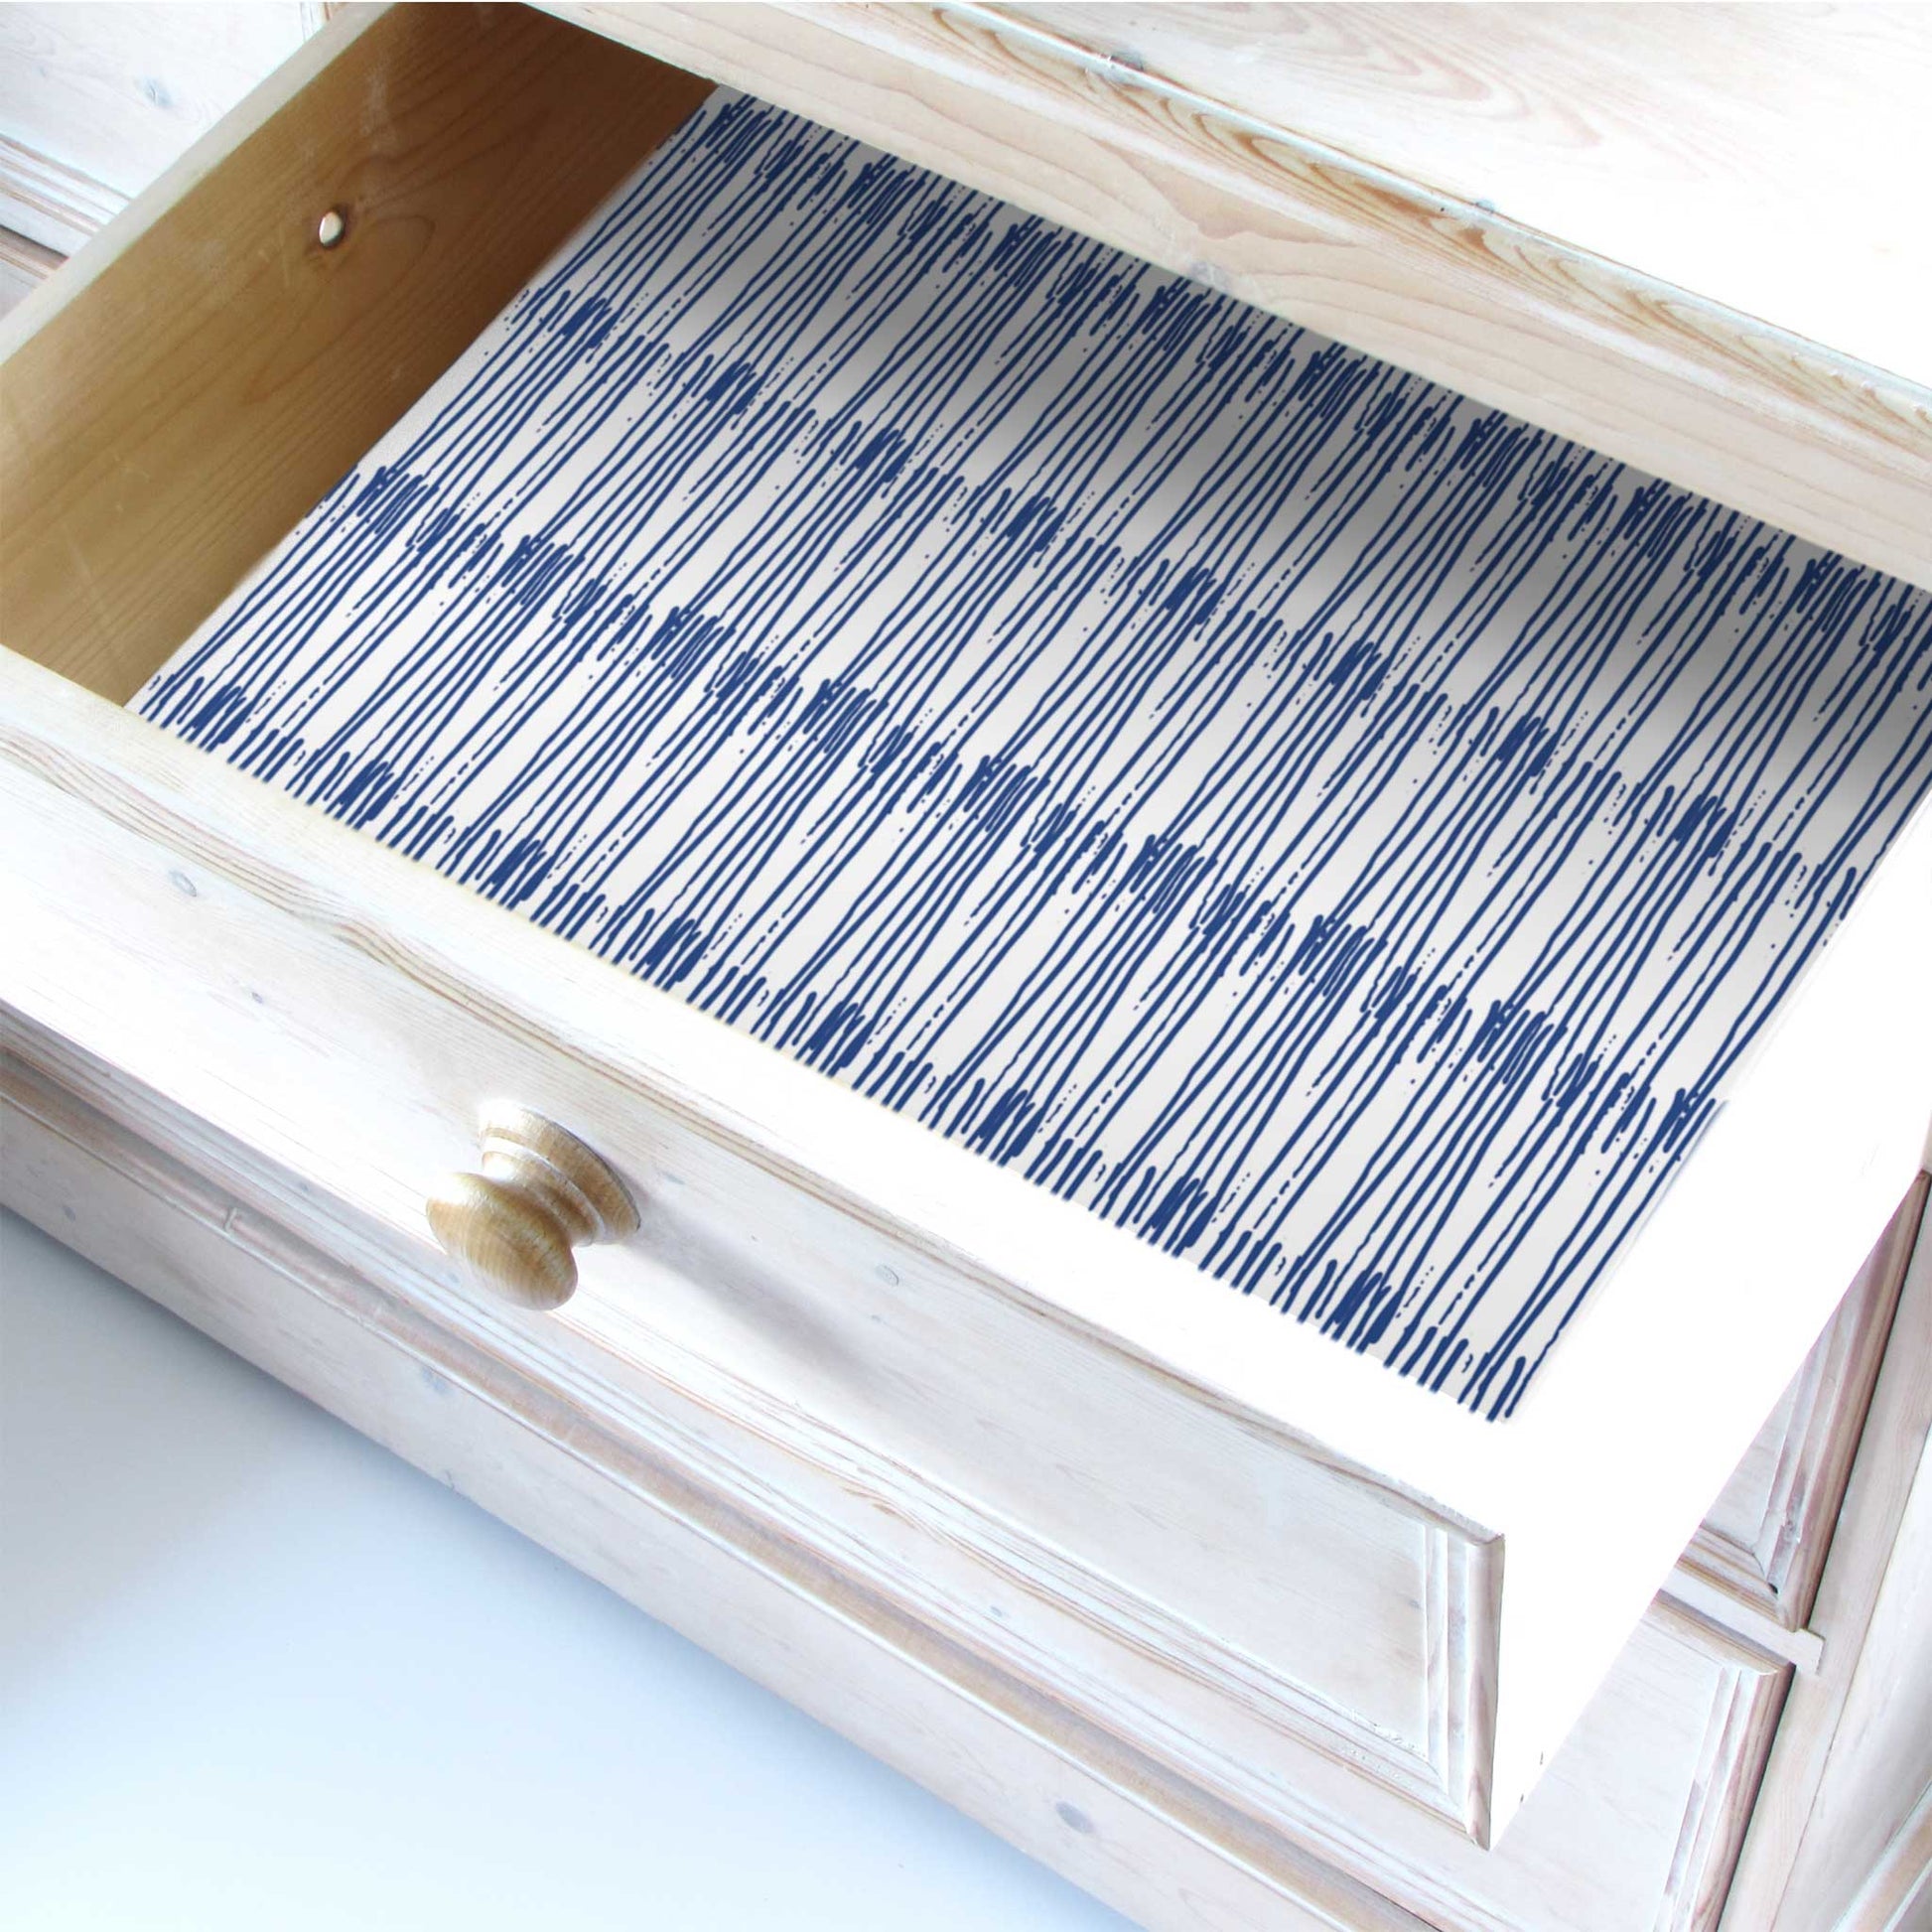 LAVENDER SCENTED Drawer Liners in BLUE William Morris Design